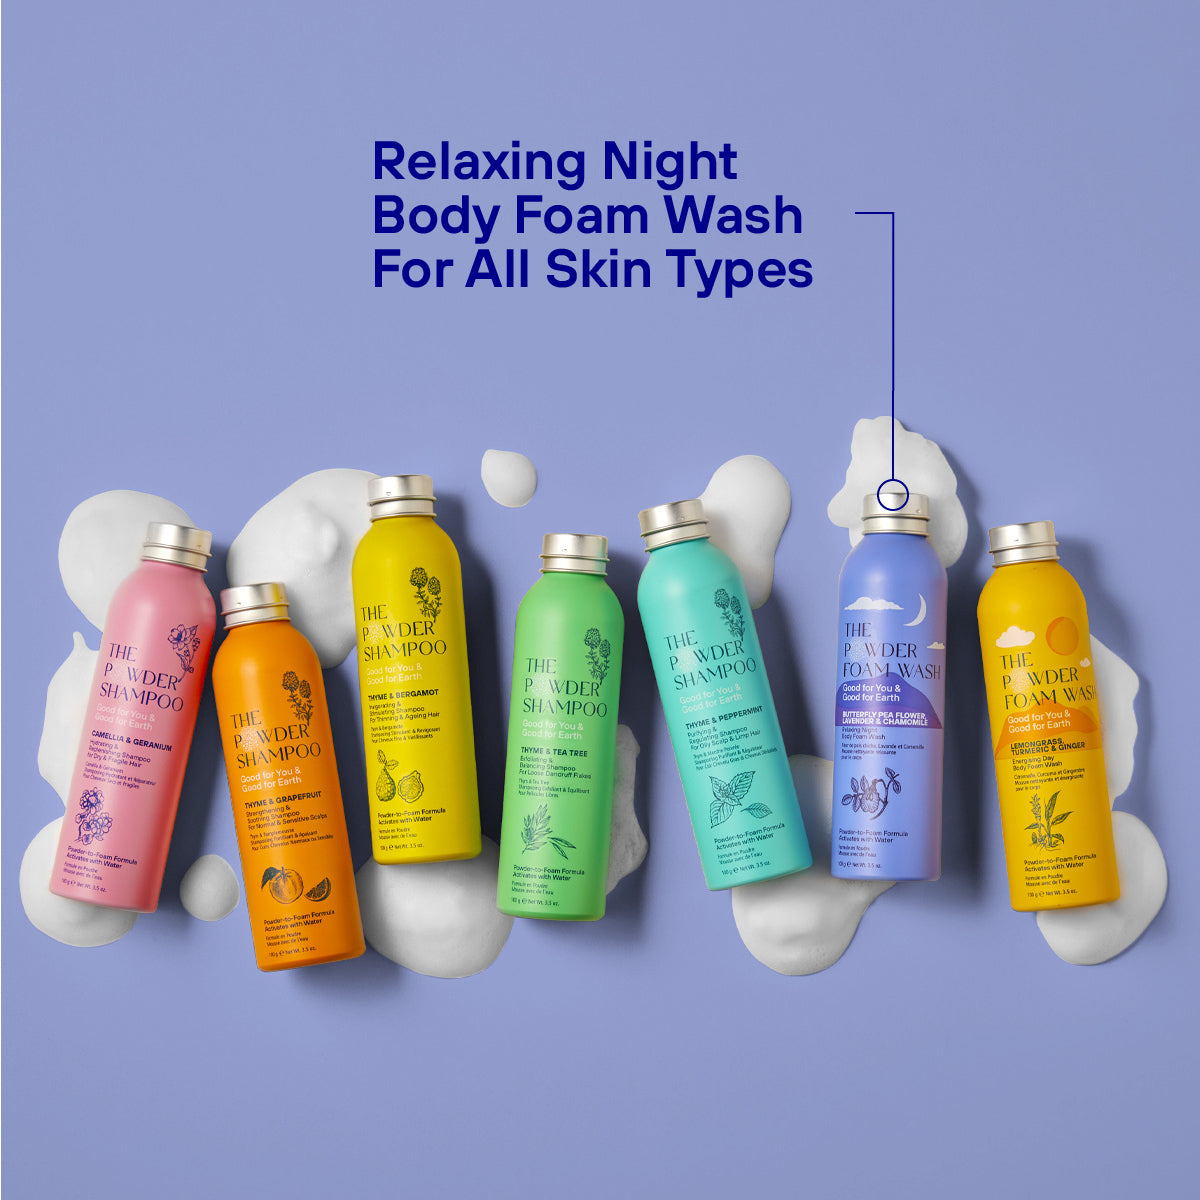 35x Relaxing Night Body Foam Wash To Unwind Your Mind 100g / 3.5oz